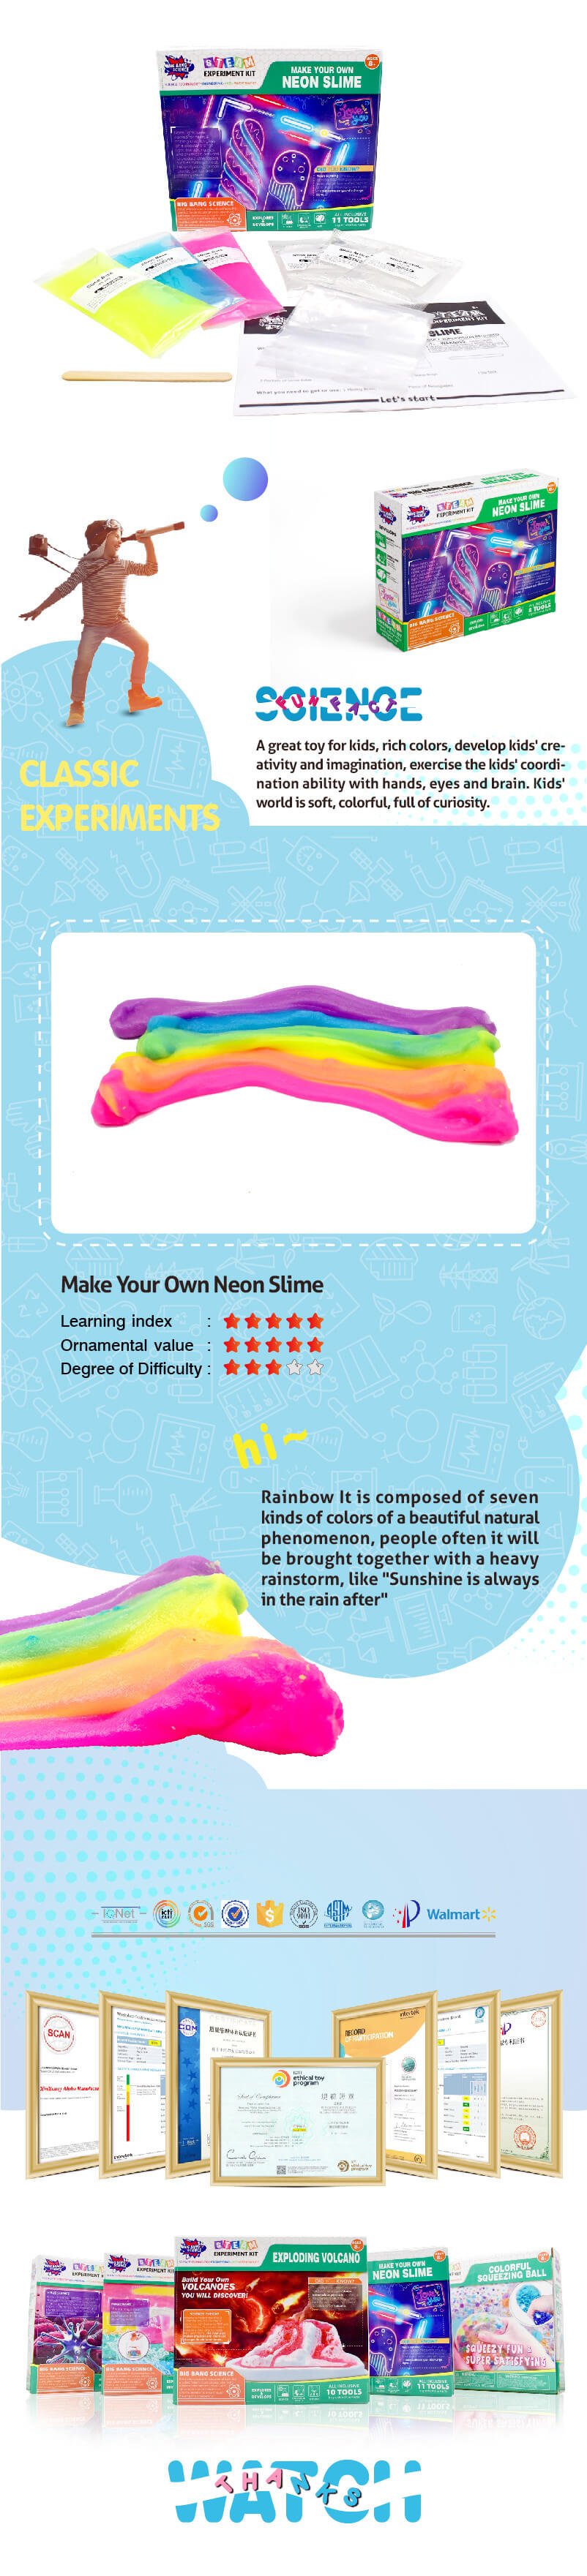 SS190917M-MAKE your own neon slime-diy slime for kids